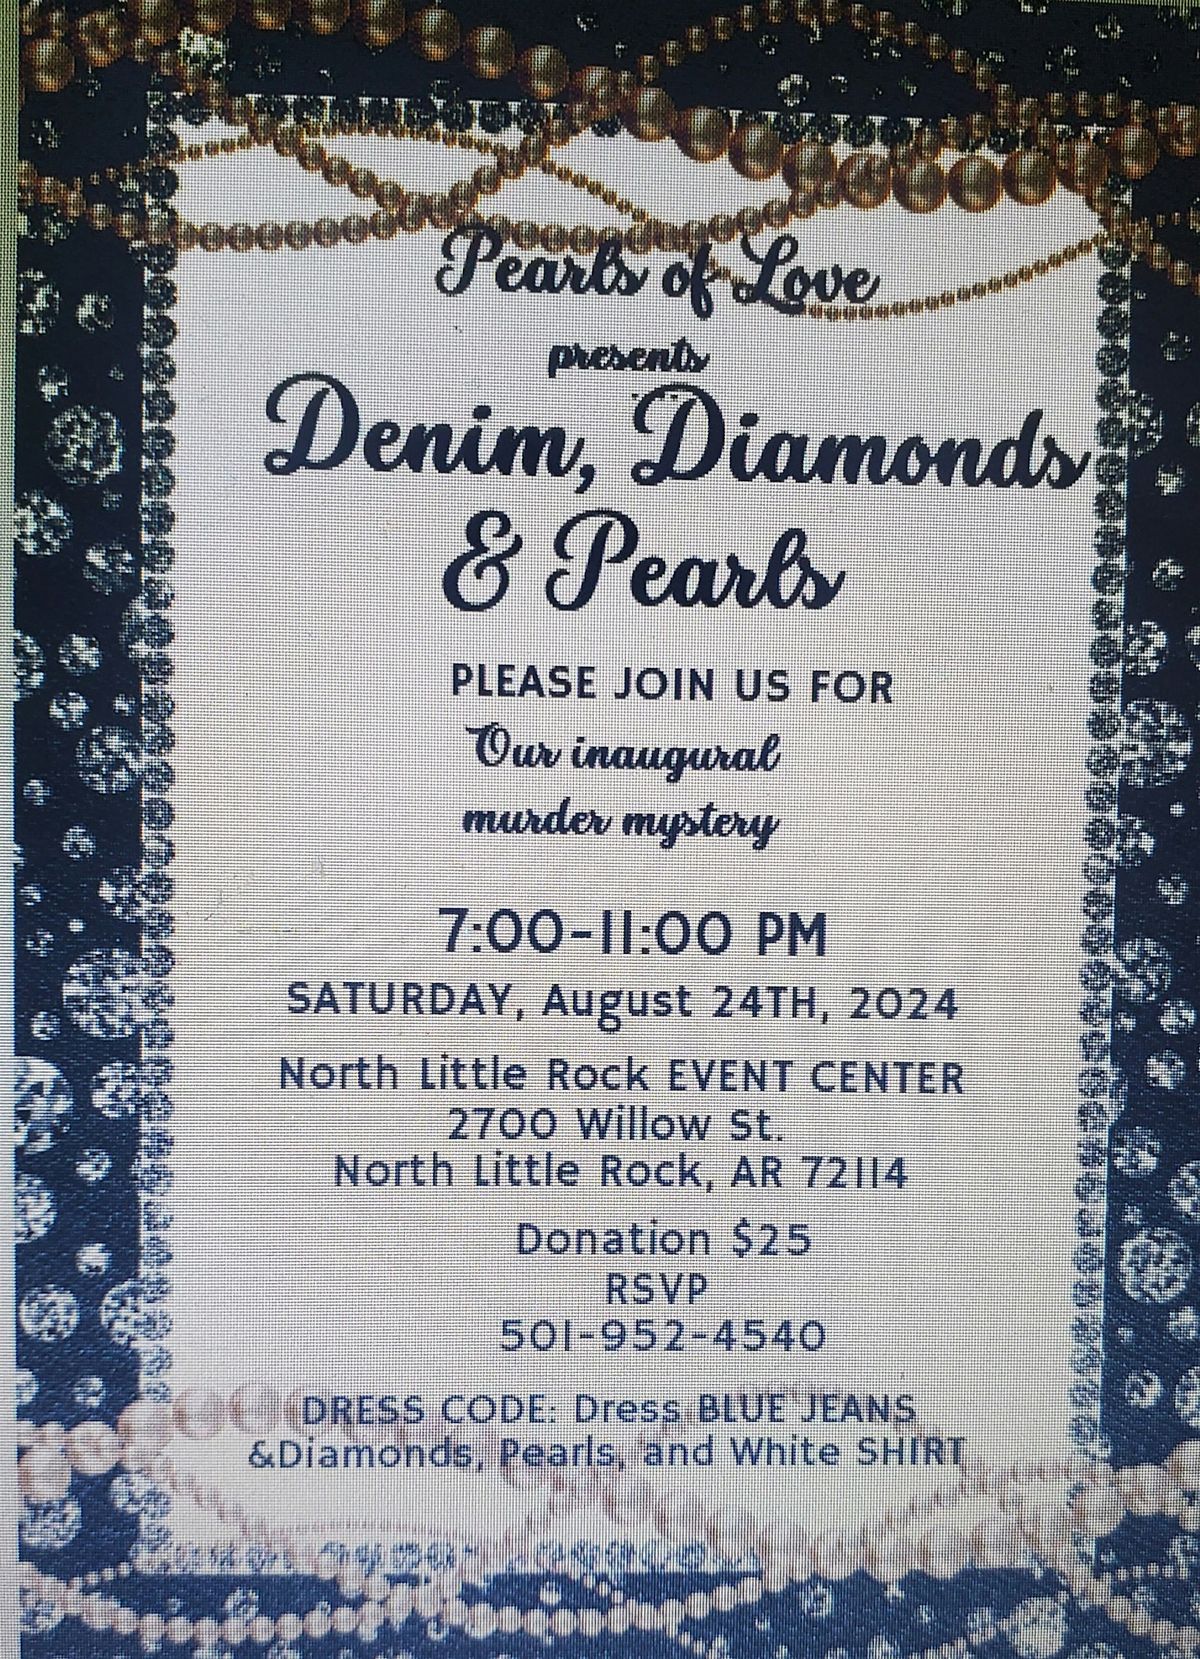 Denim, Diamonds and Pearl's